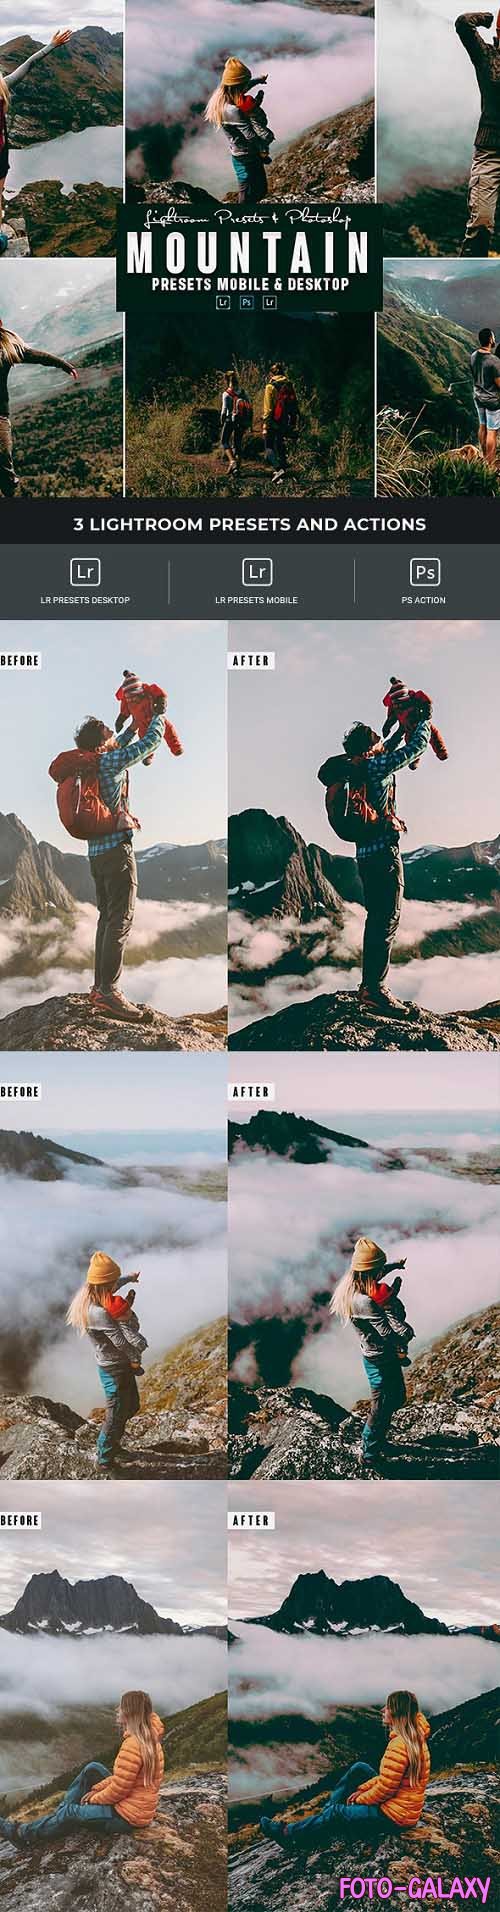 Mountain Photoshop Action & Lightrom Presets - 34684093